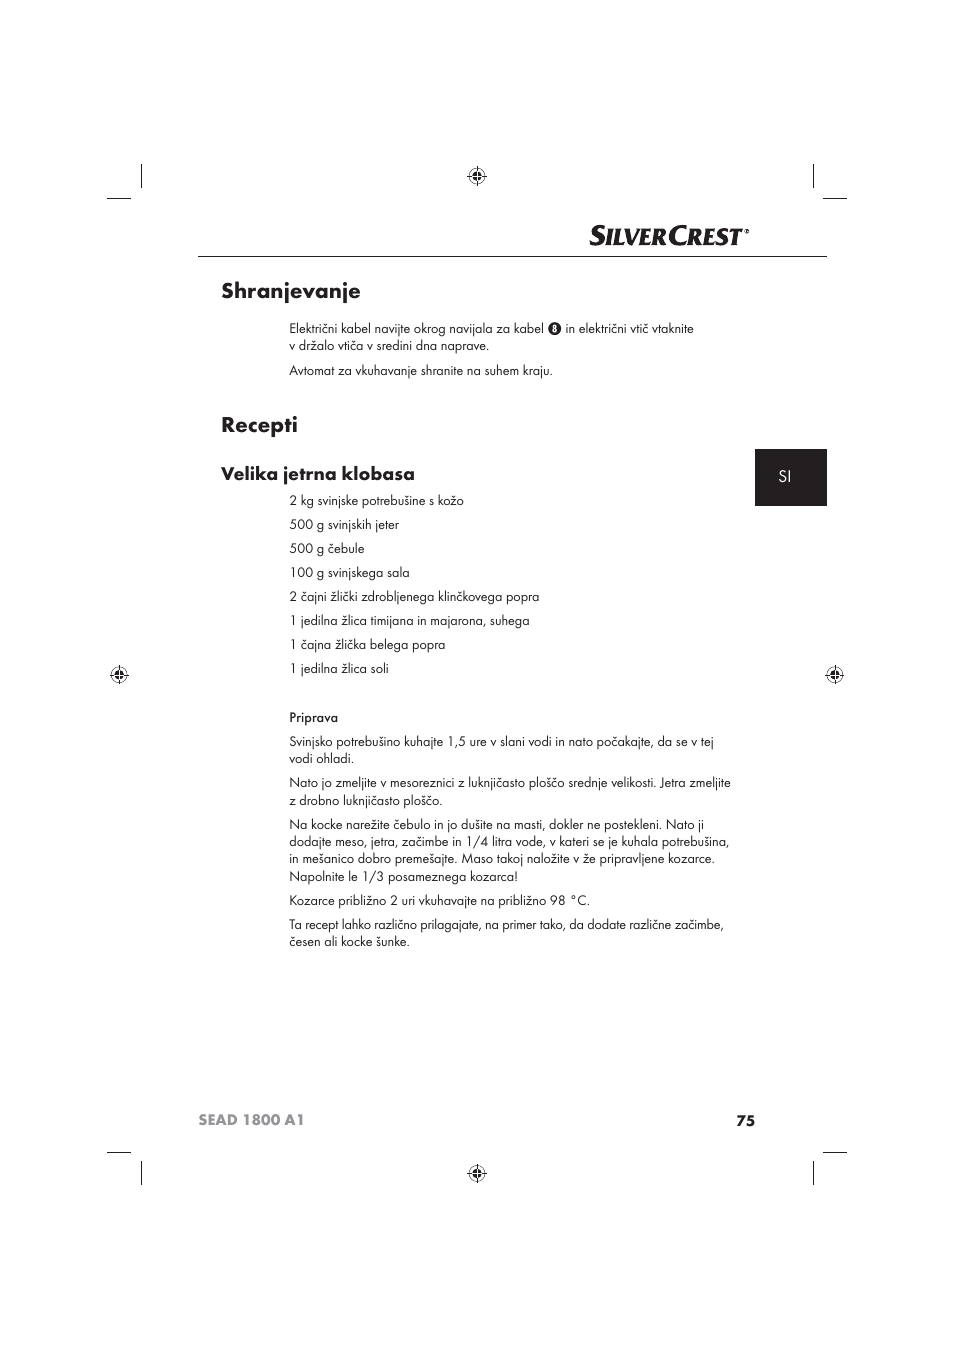 Shranjevanje, Recepti, Velika jetrna klobasa | Silvercrest SEAD 1800 A1  User Manual | Page 77 / 141 | Original mode